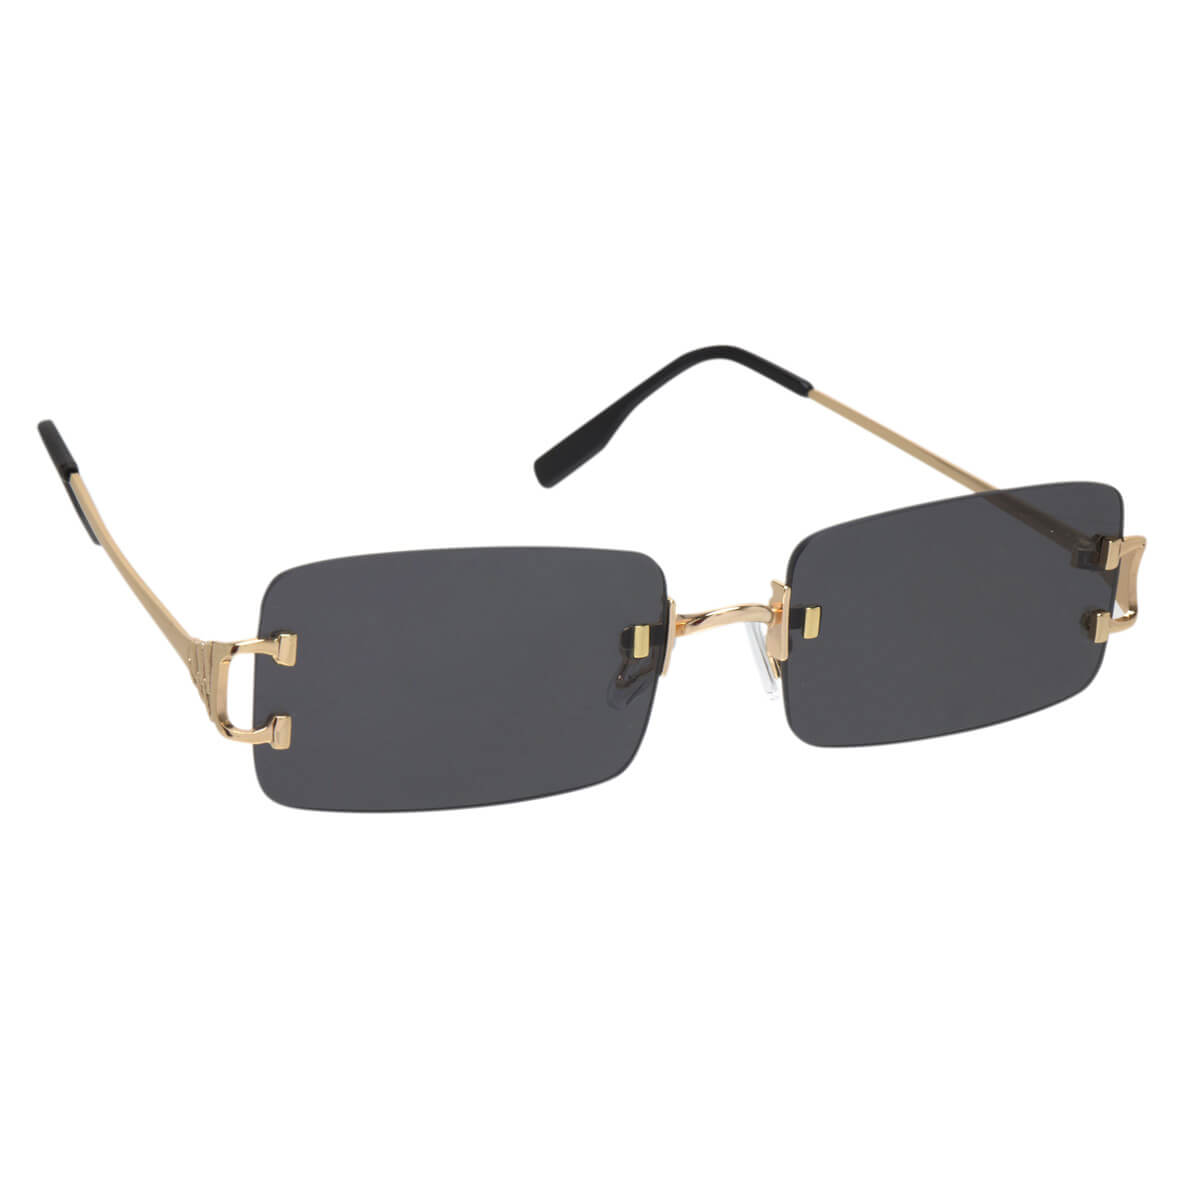 Rectangular sunglasses without frames